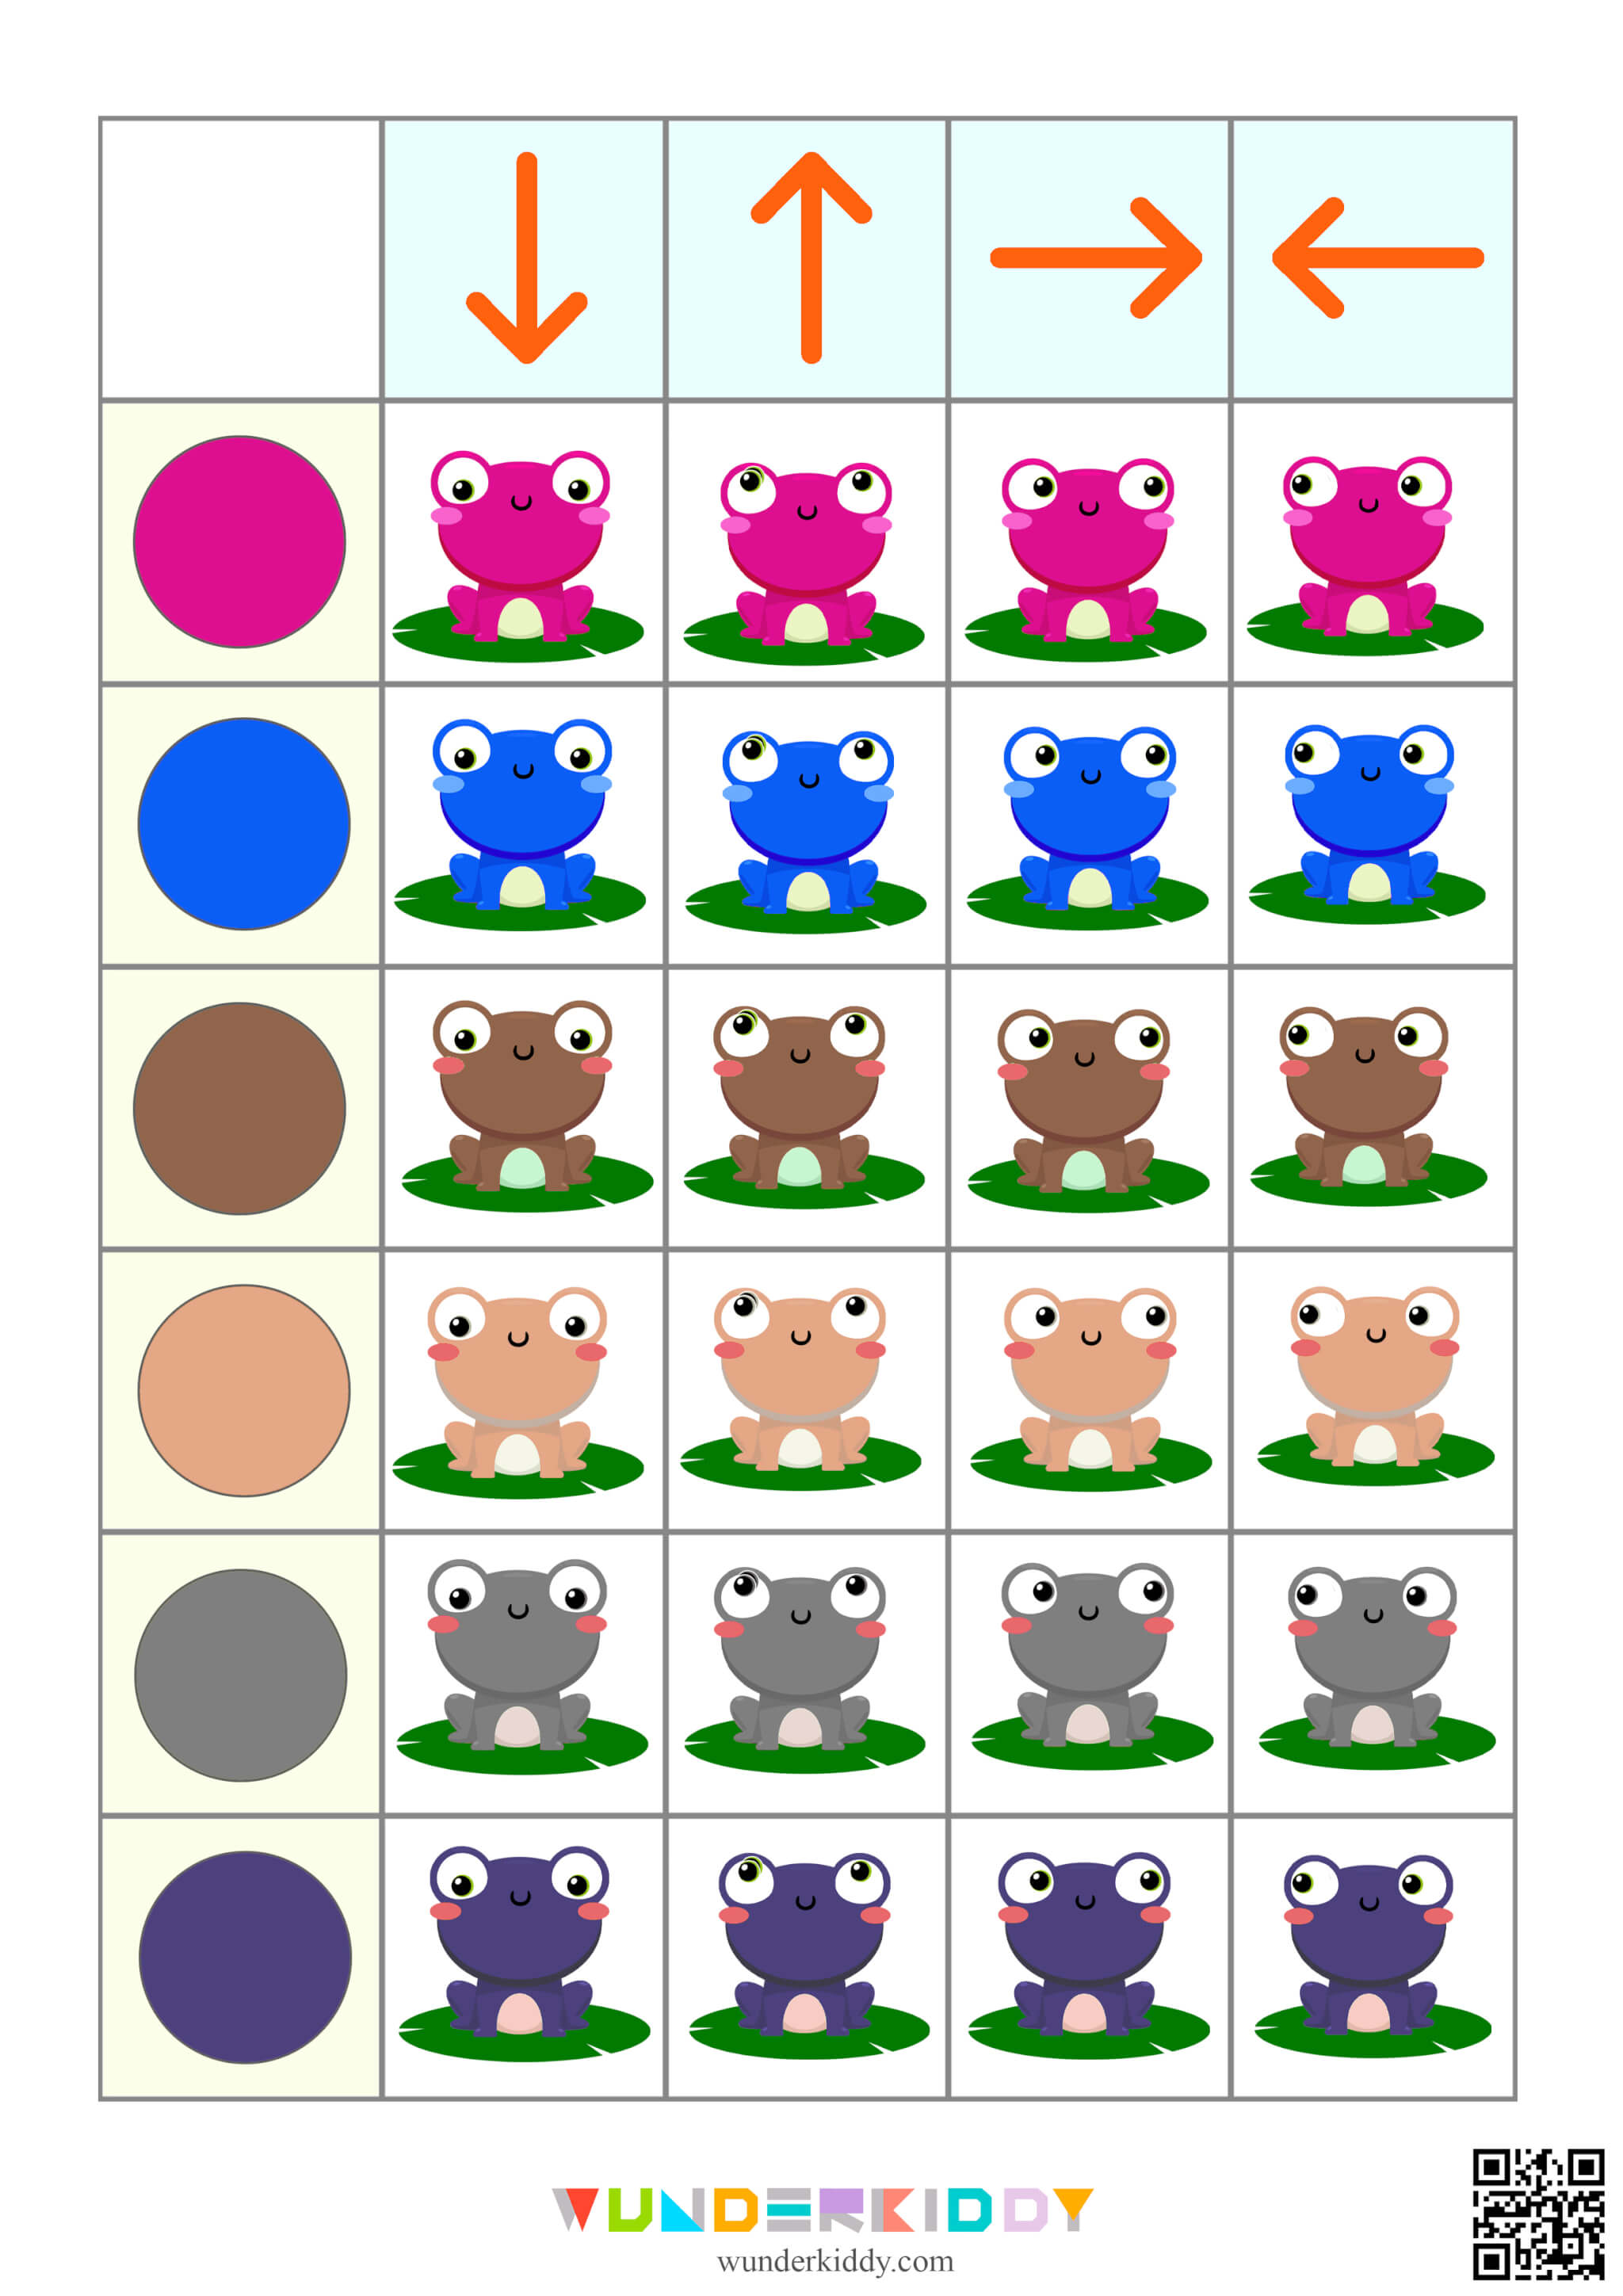 Frog Color Match Game for Kids - Image 4